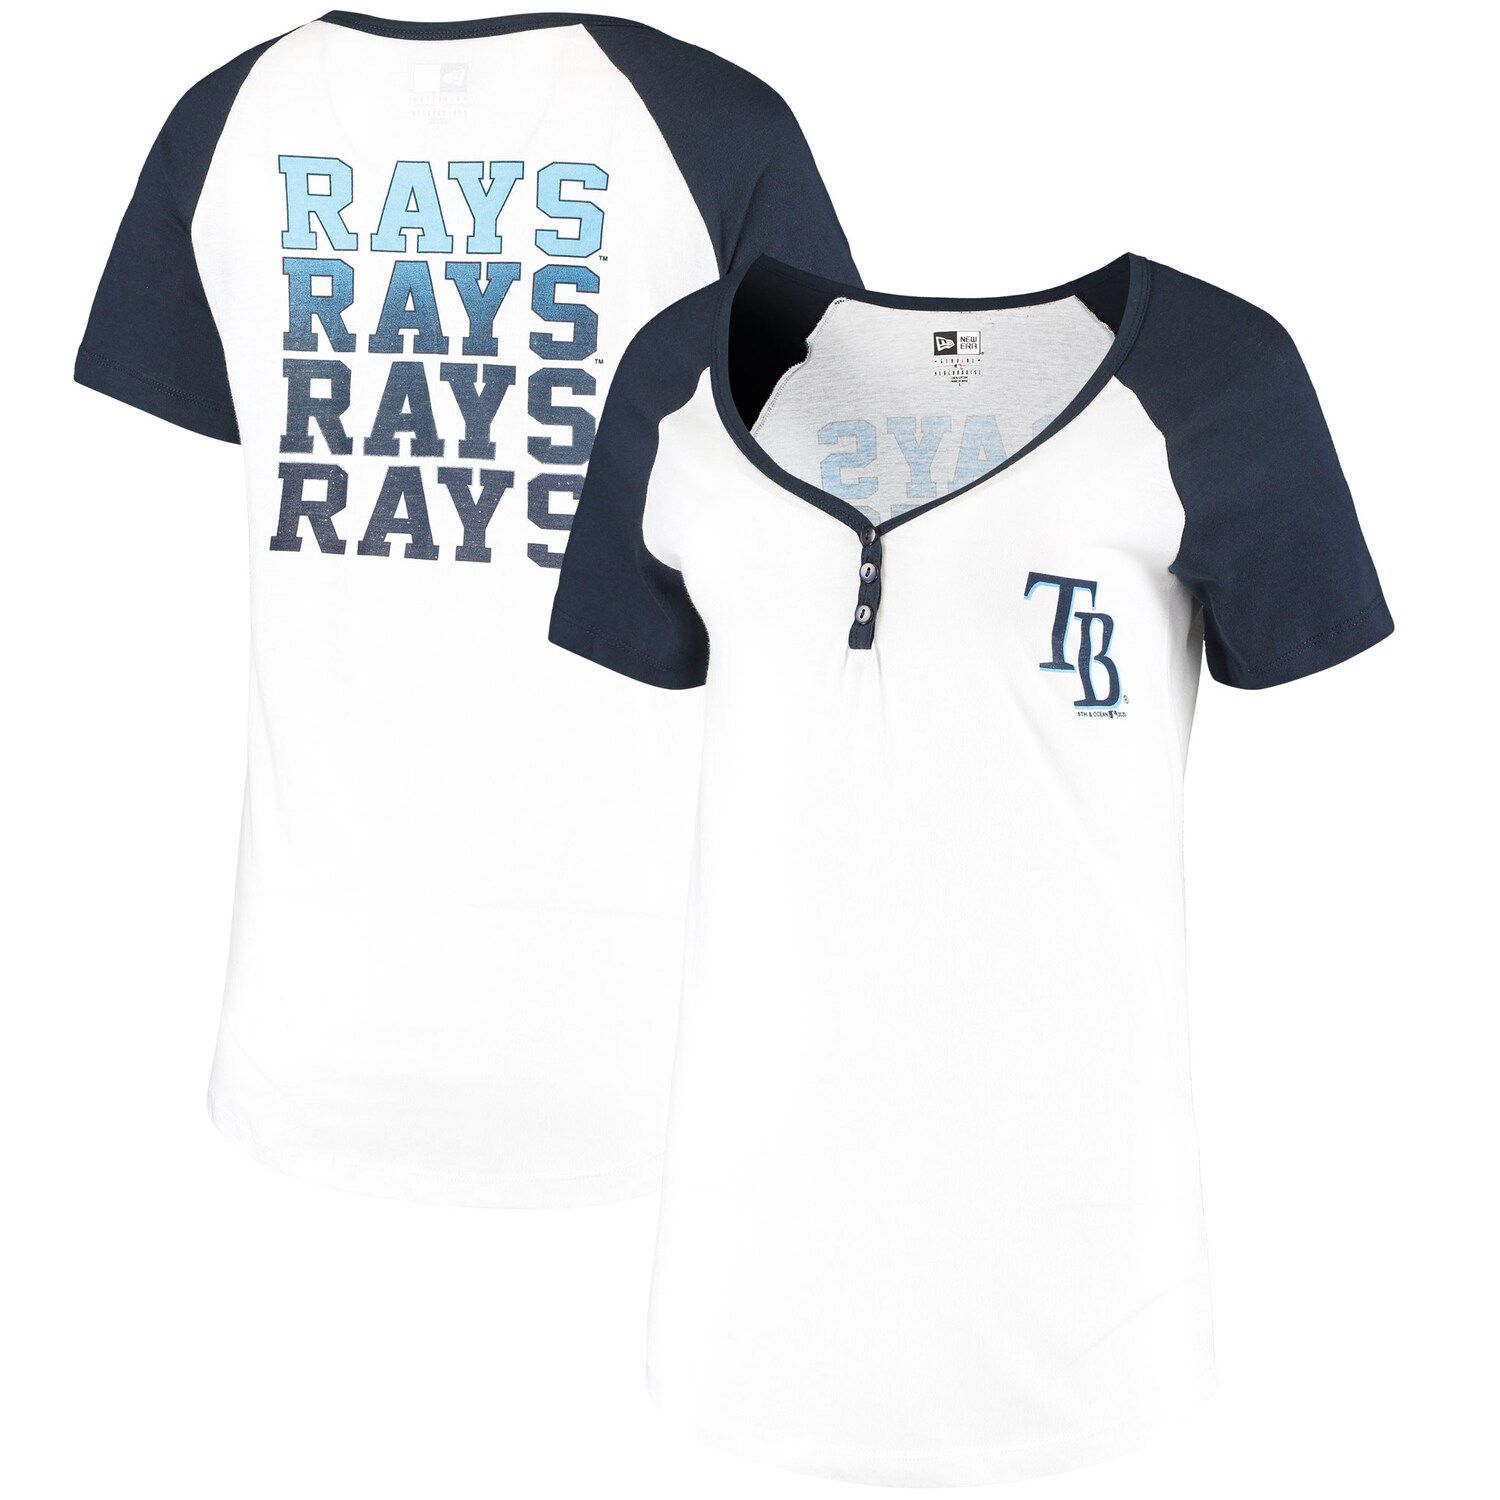 tampa bay rays womens jersey